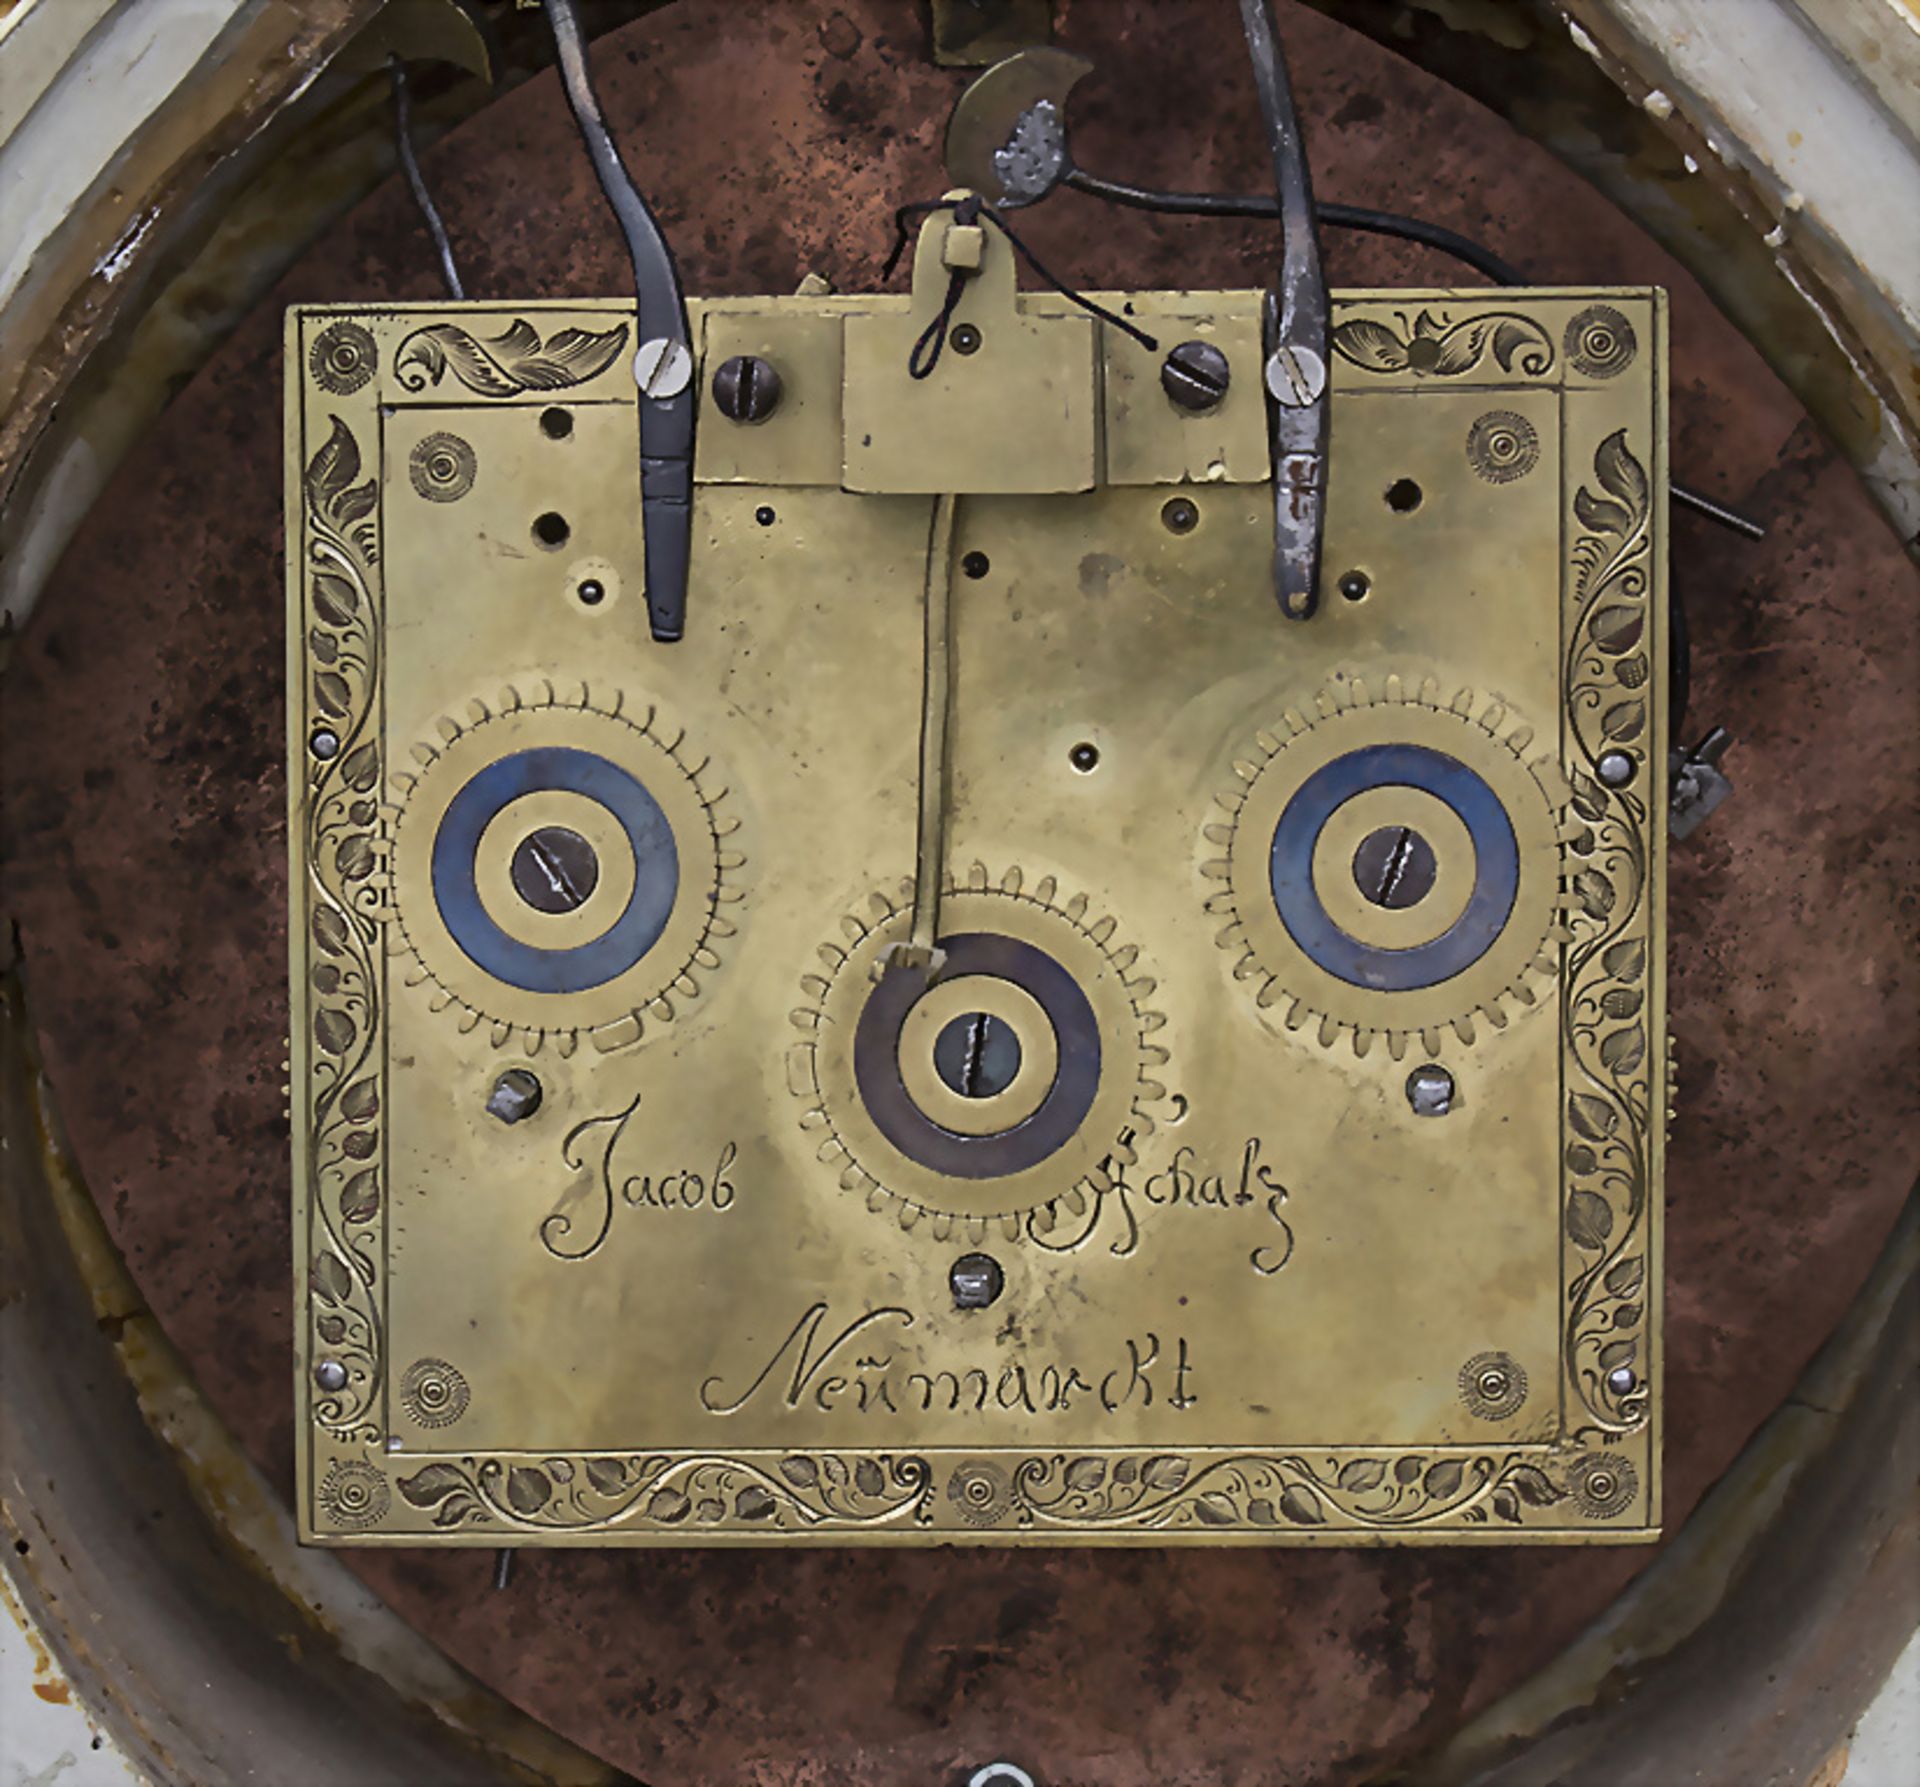 Louis-Seize-Kaminuhr / Louis-Seize mantle Clock, Jocob Scholz, Neumarkt, um 1775 - Image 4 of 4